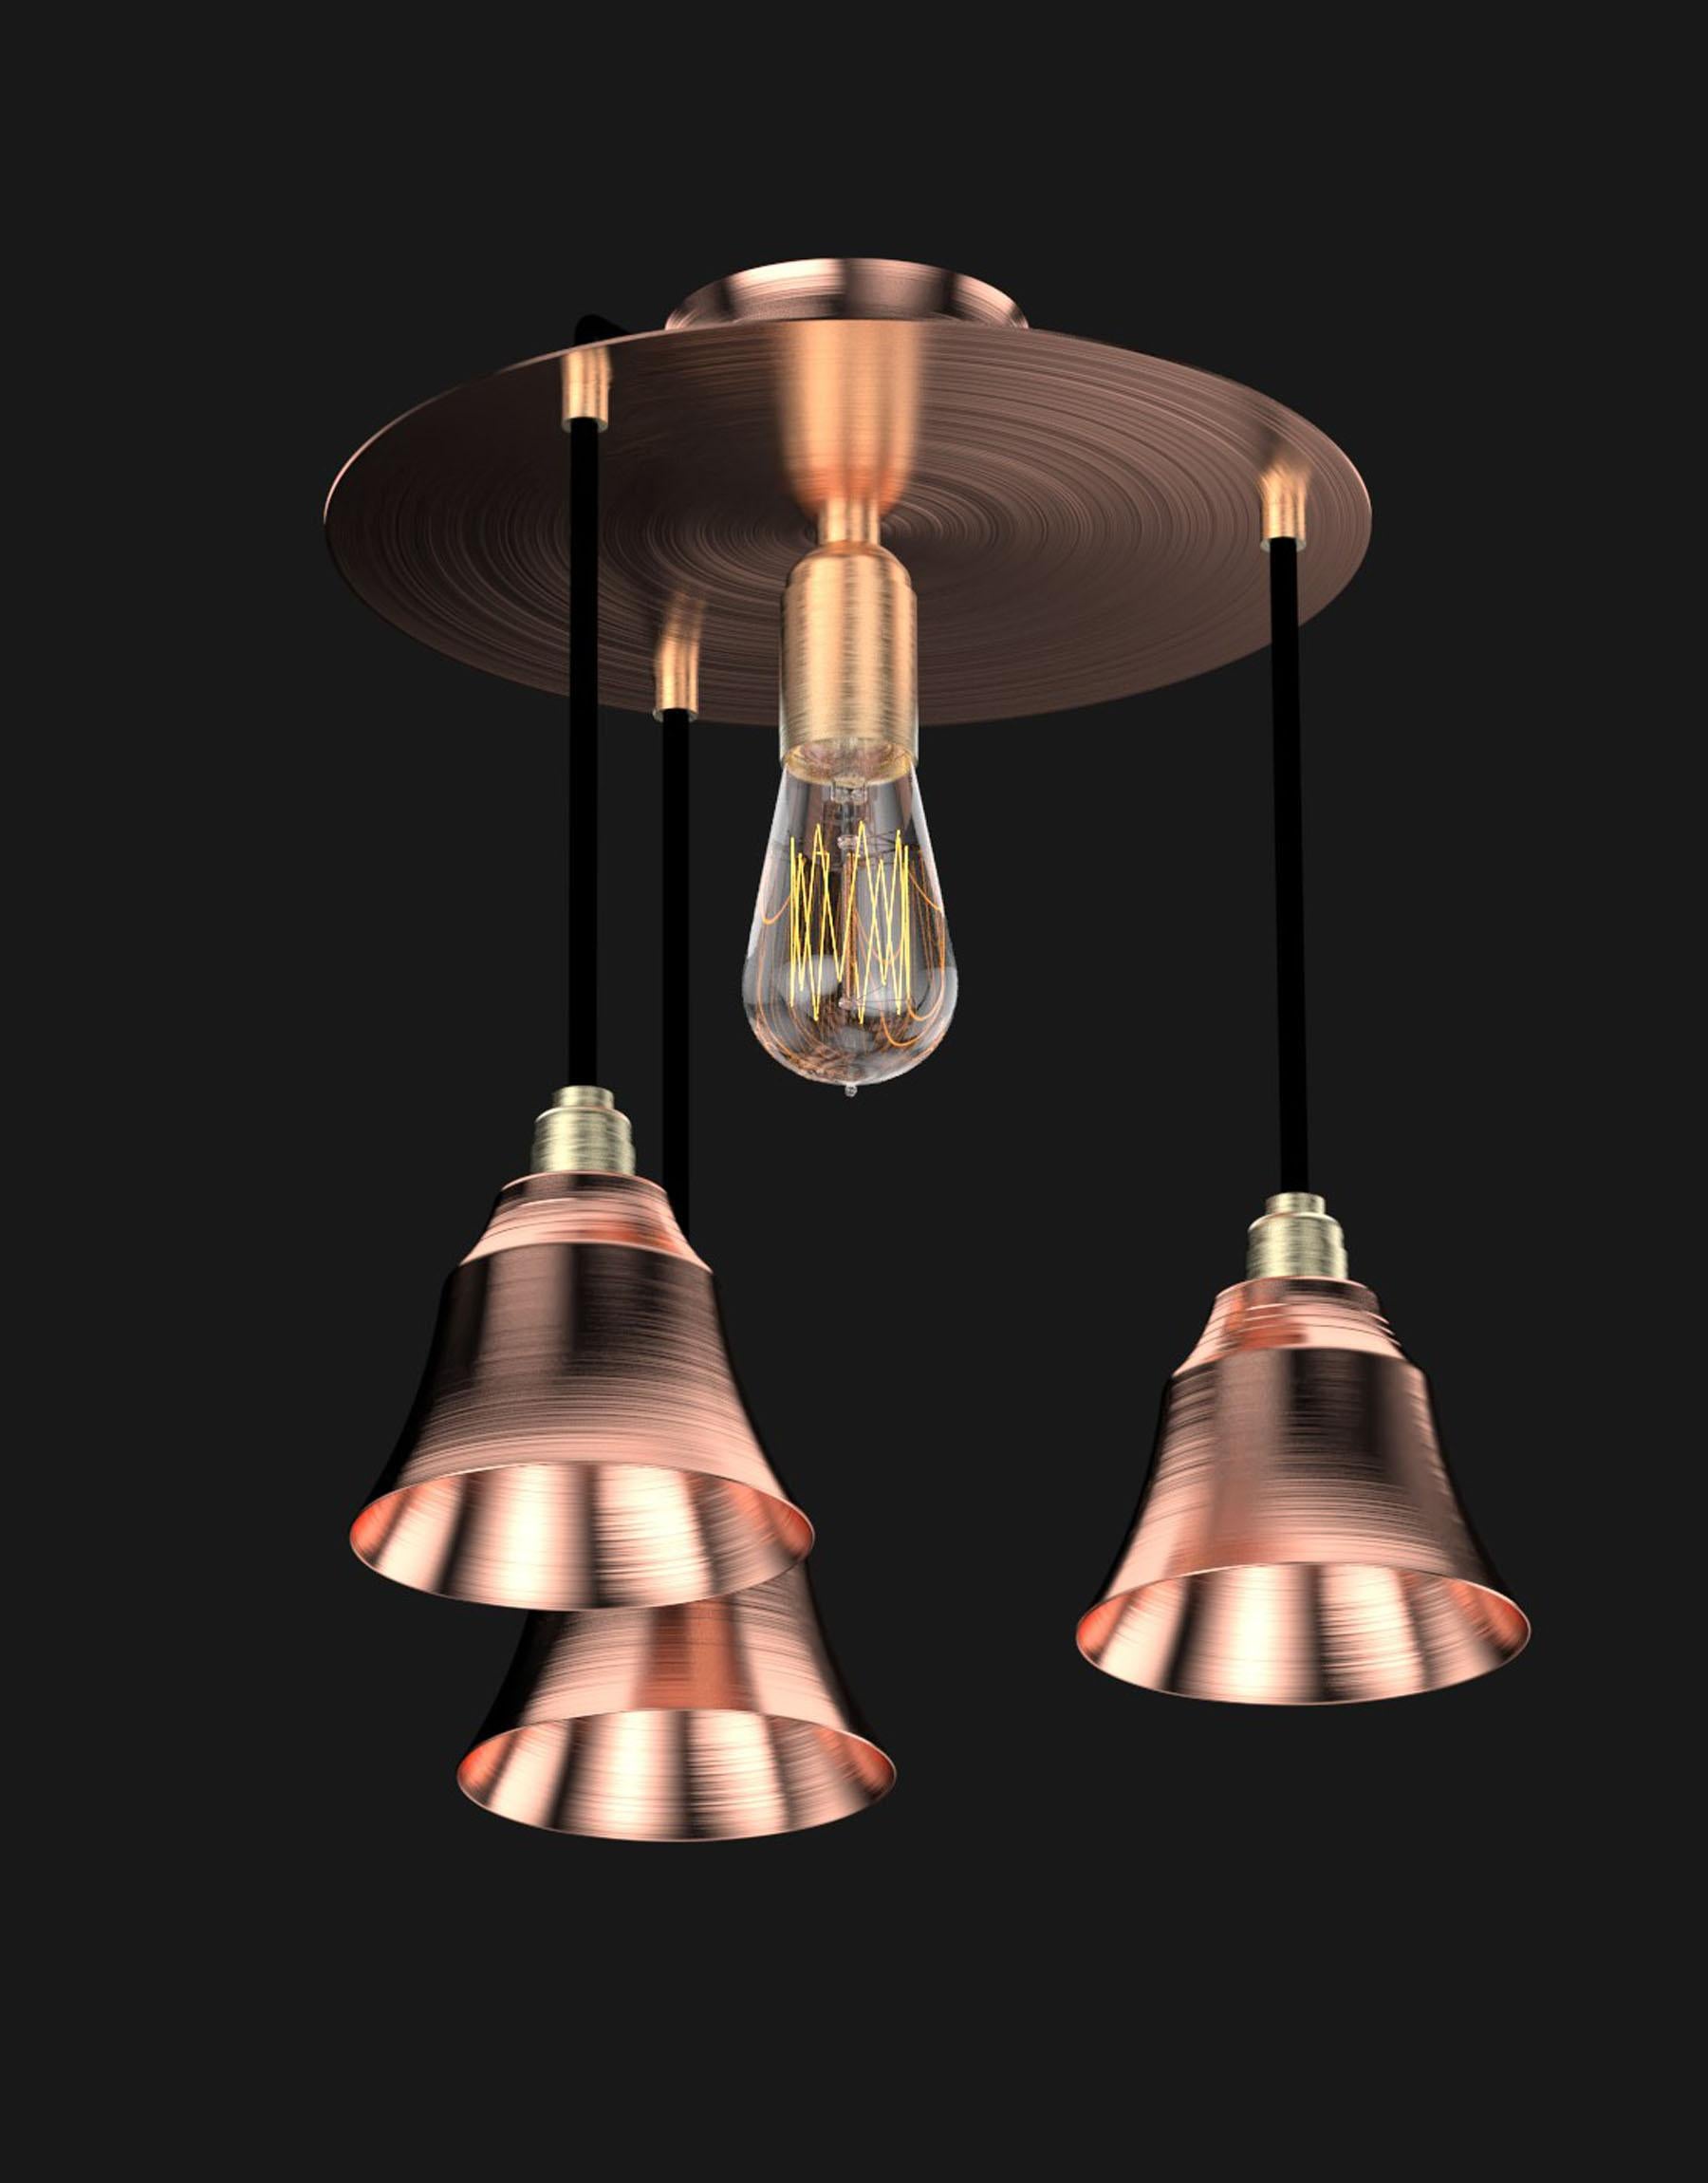 French Edimate Genuine Copper Ceiling Light, Handmade in France Version 2 For Sale